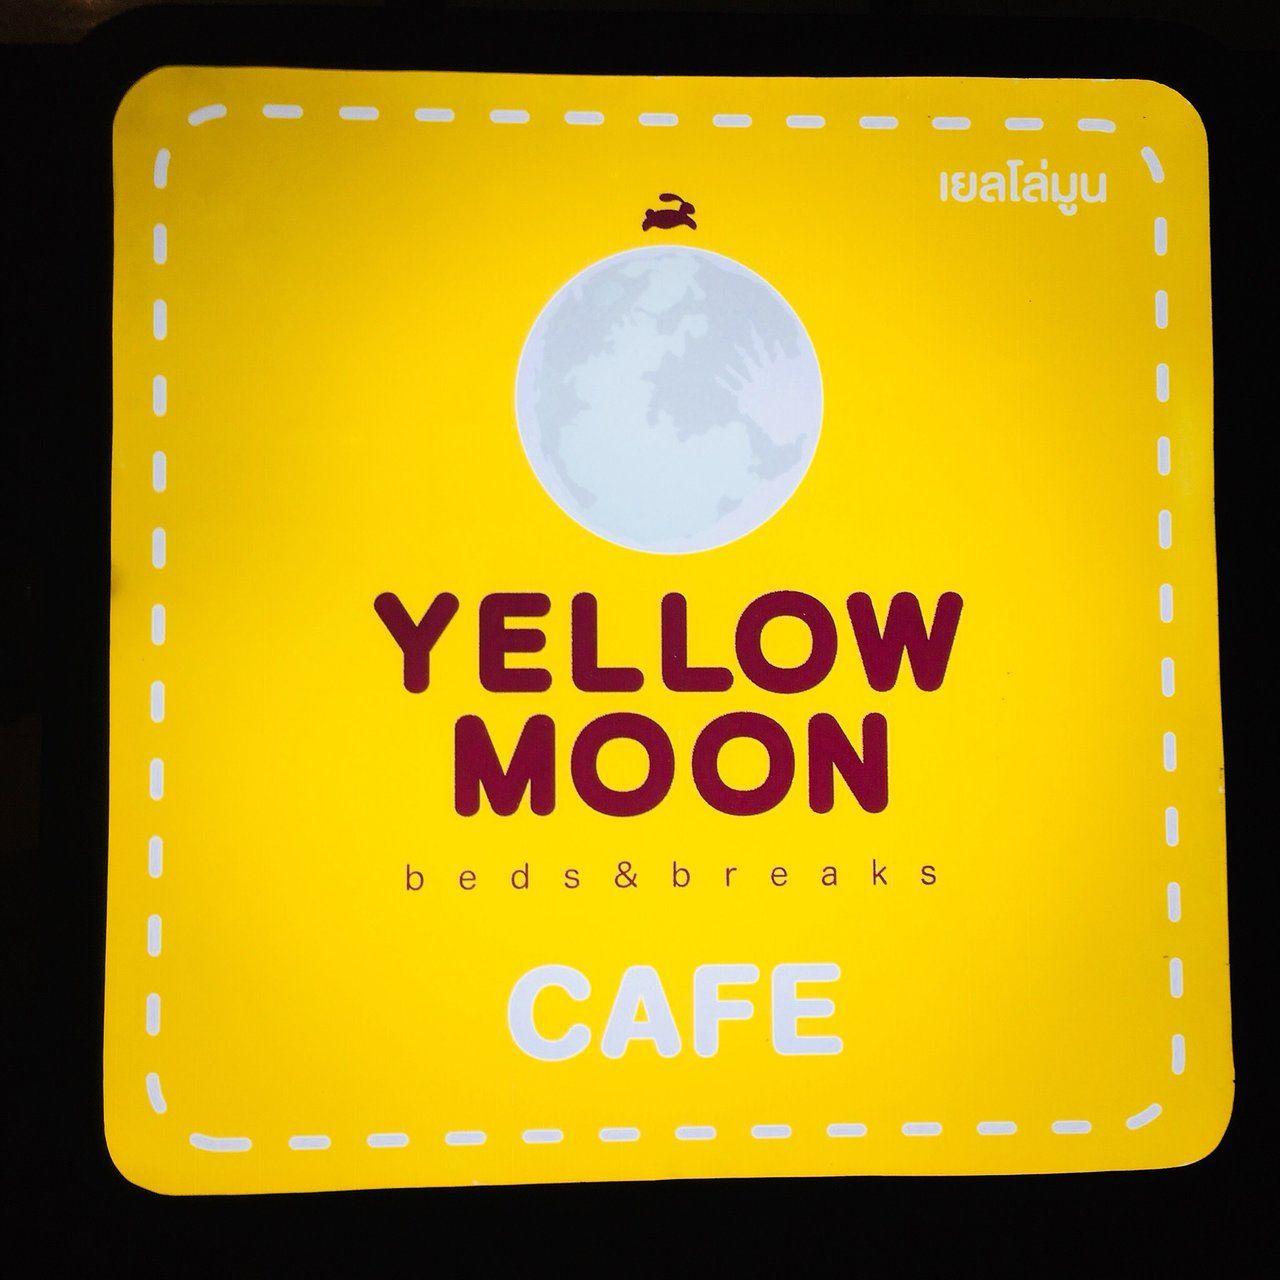 Yellow Moon Logo - YELLOW MOON HOTEL (Pattaya, Thailand), Photo & Price